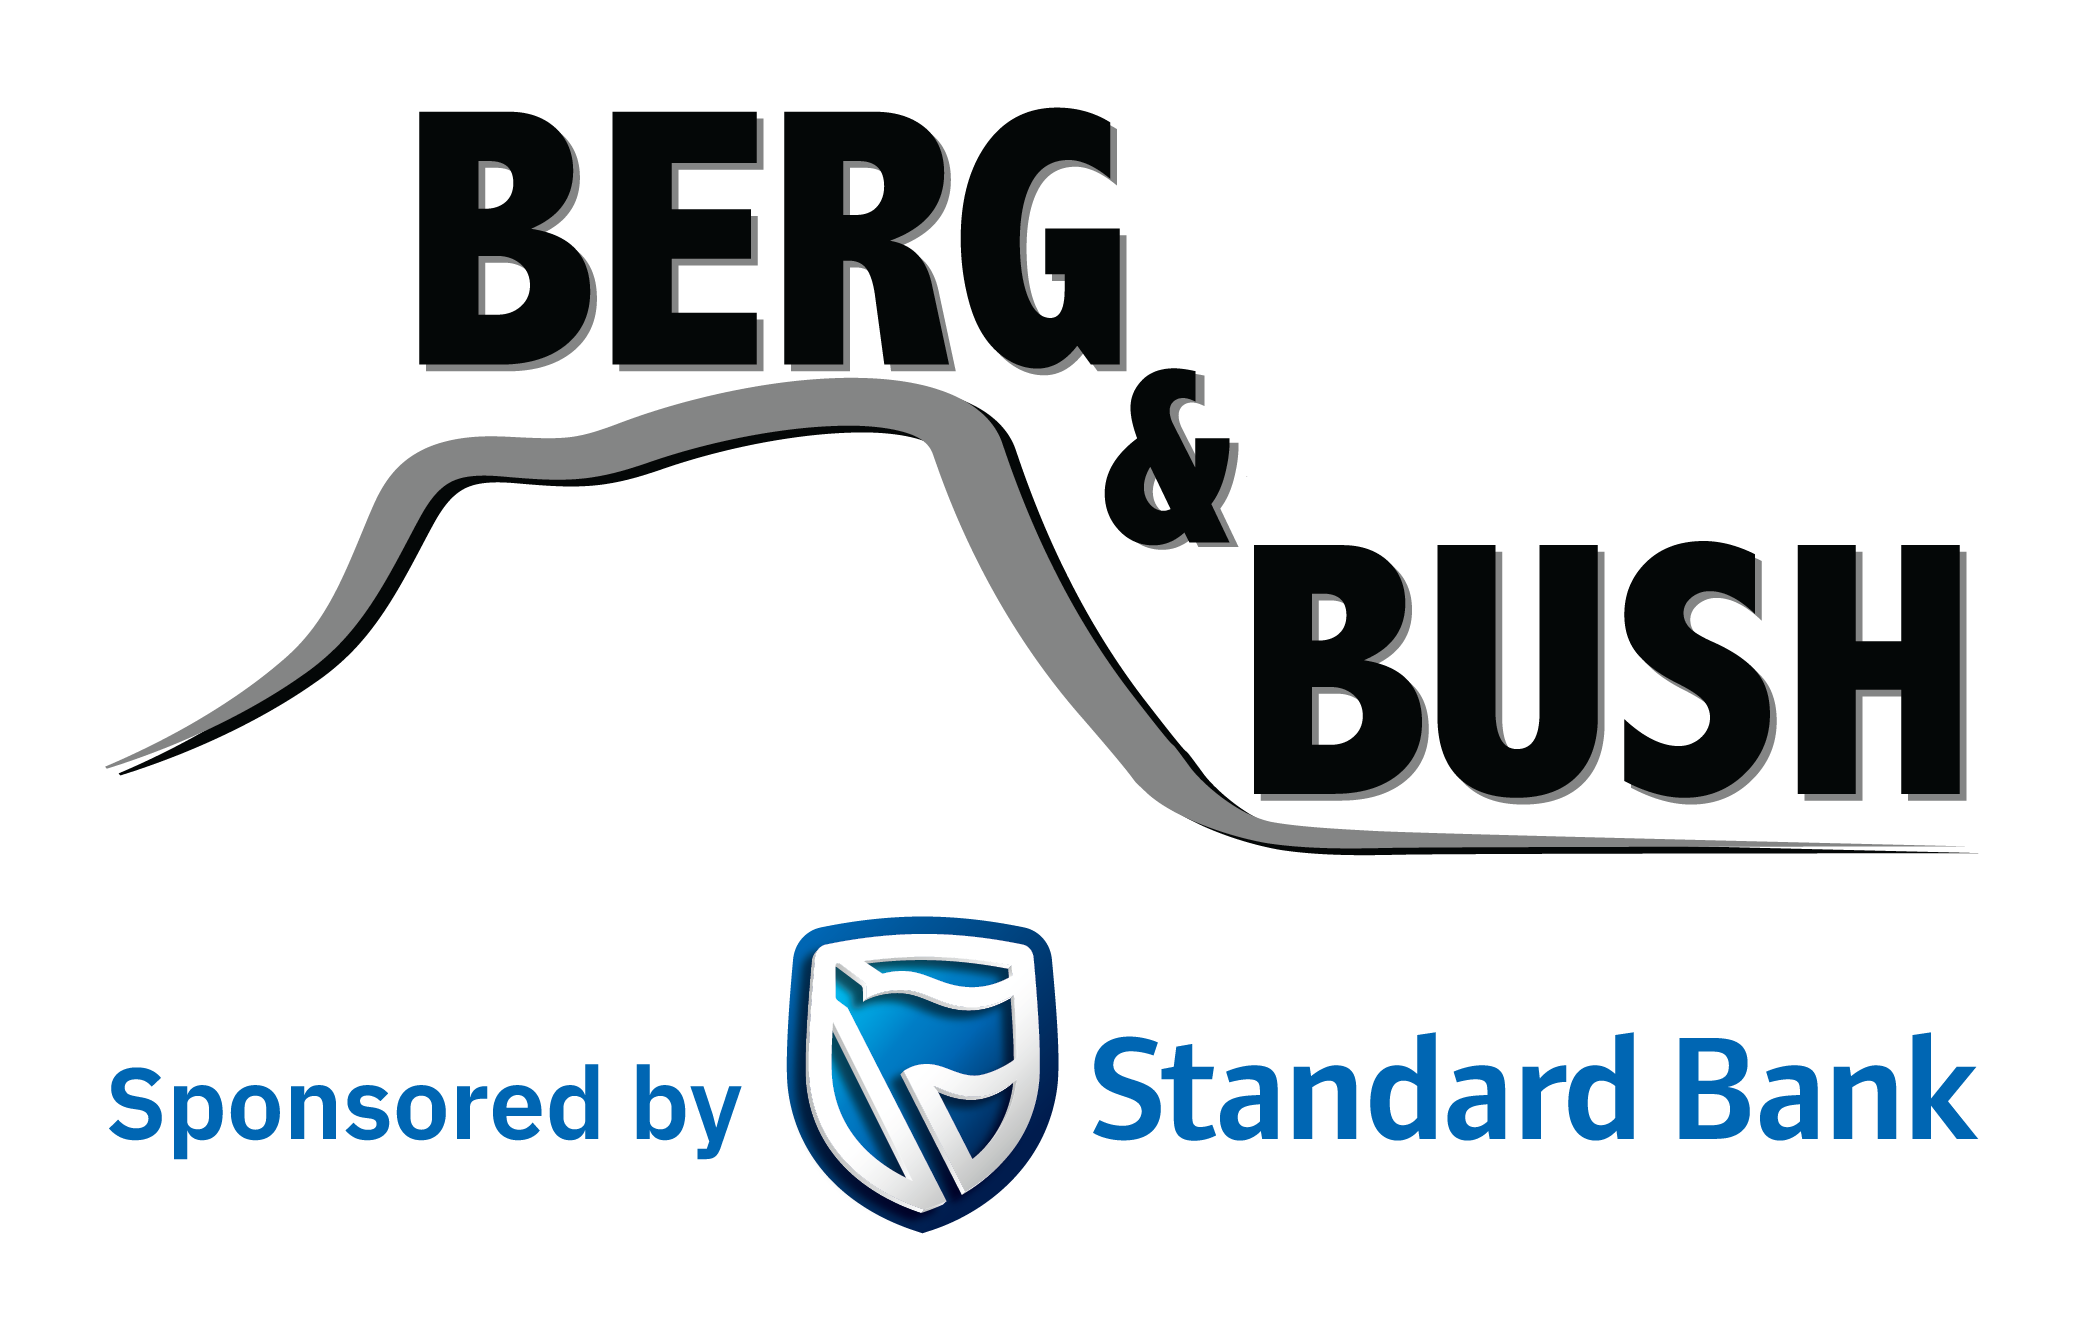 Berg and Bush - Sponsored by Standard Bank